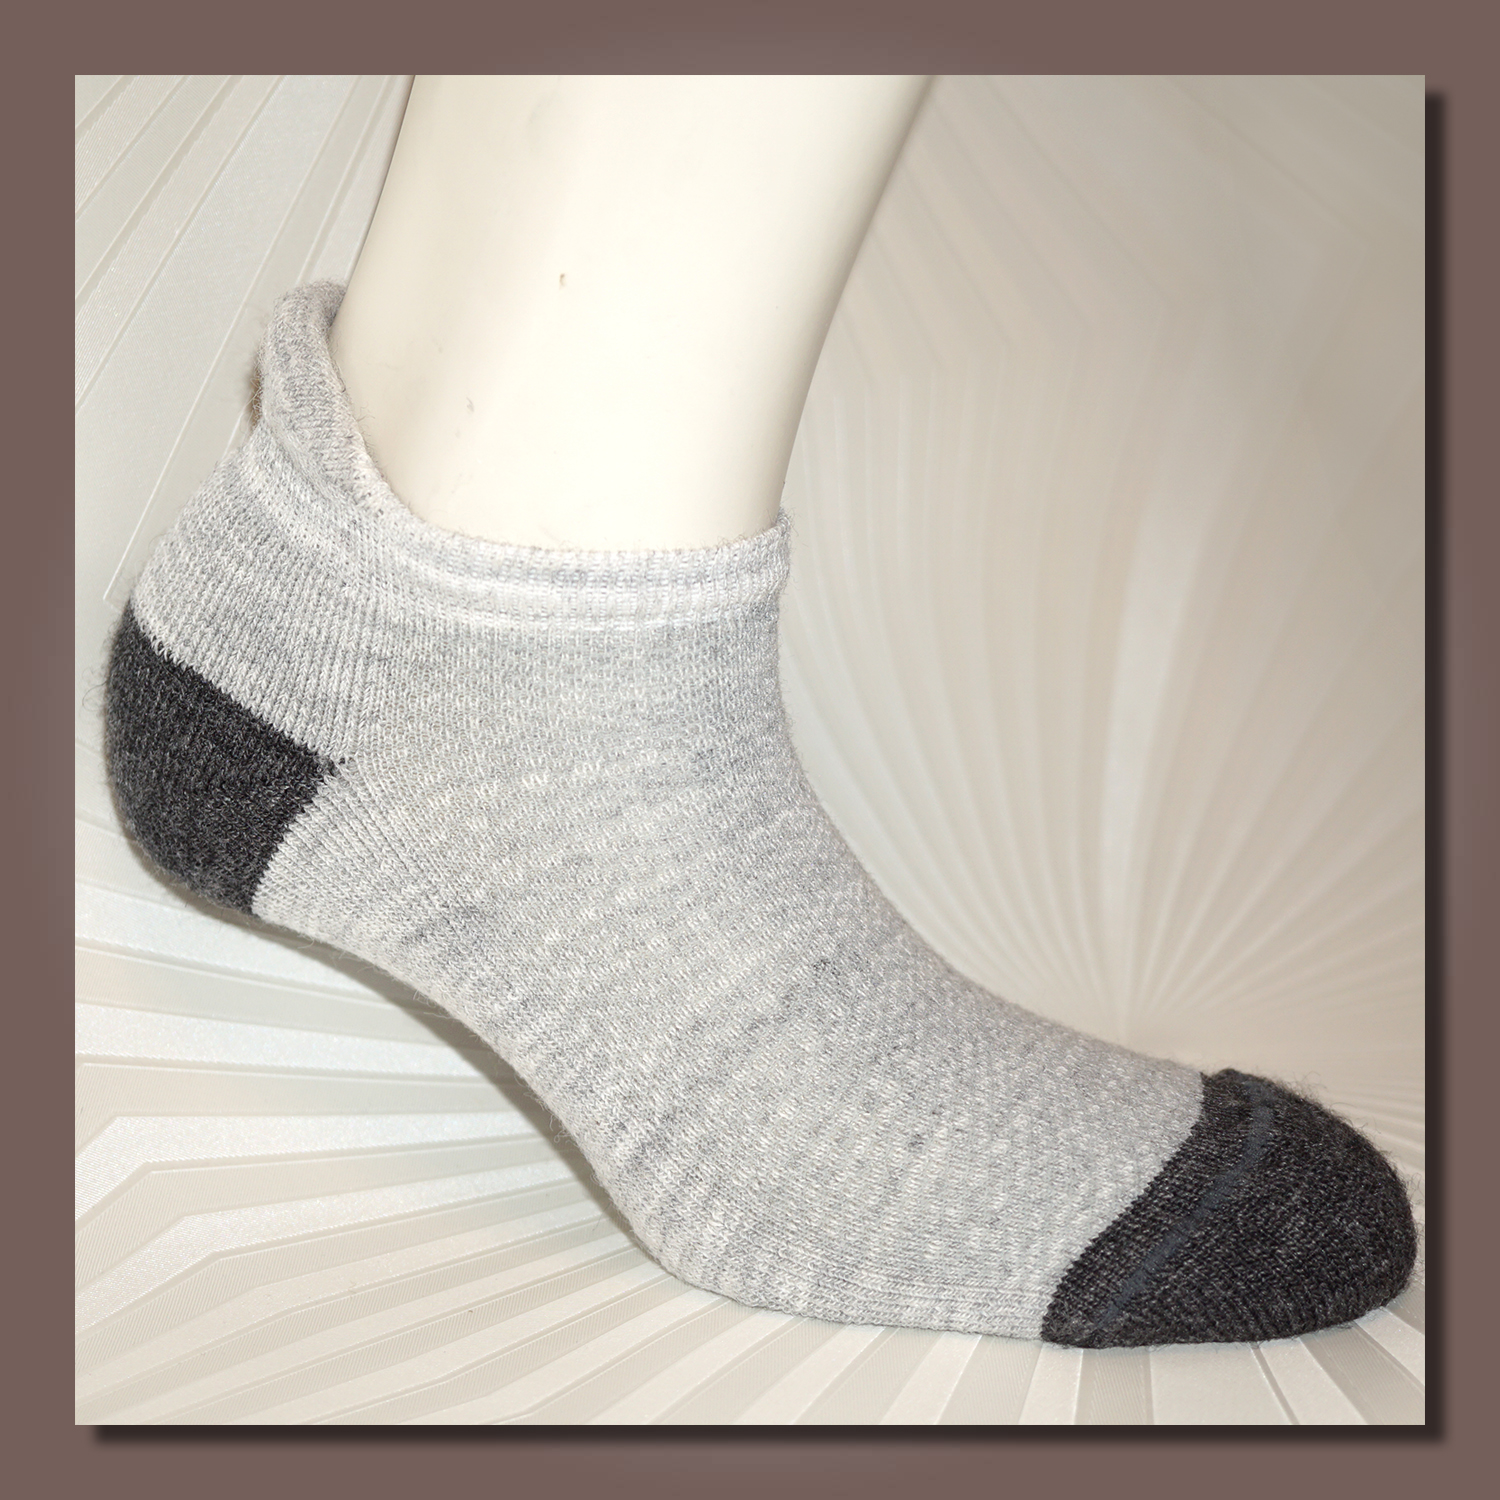 Socken/socks SNEAKER, Farbe/colour: grau/gray, Größe/size: M